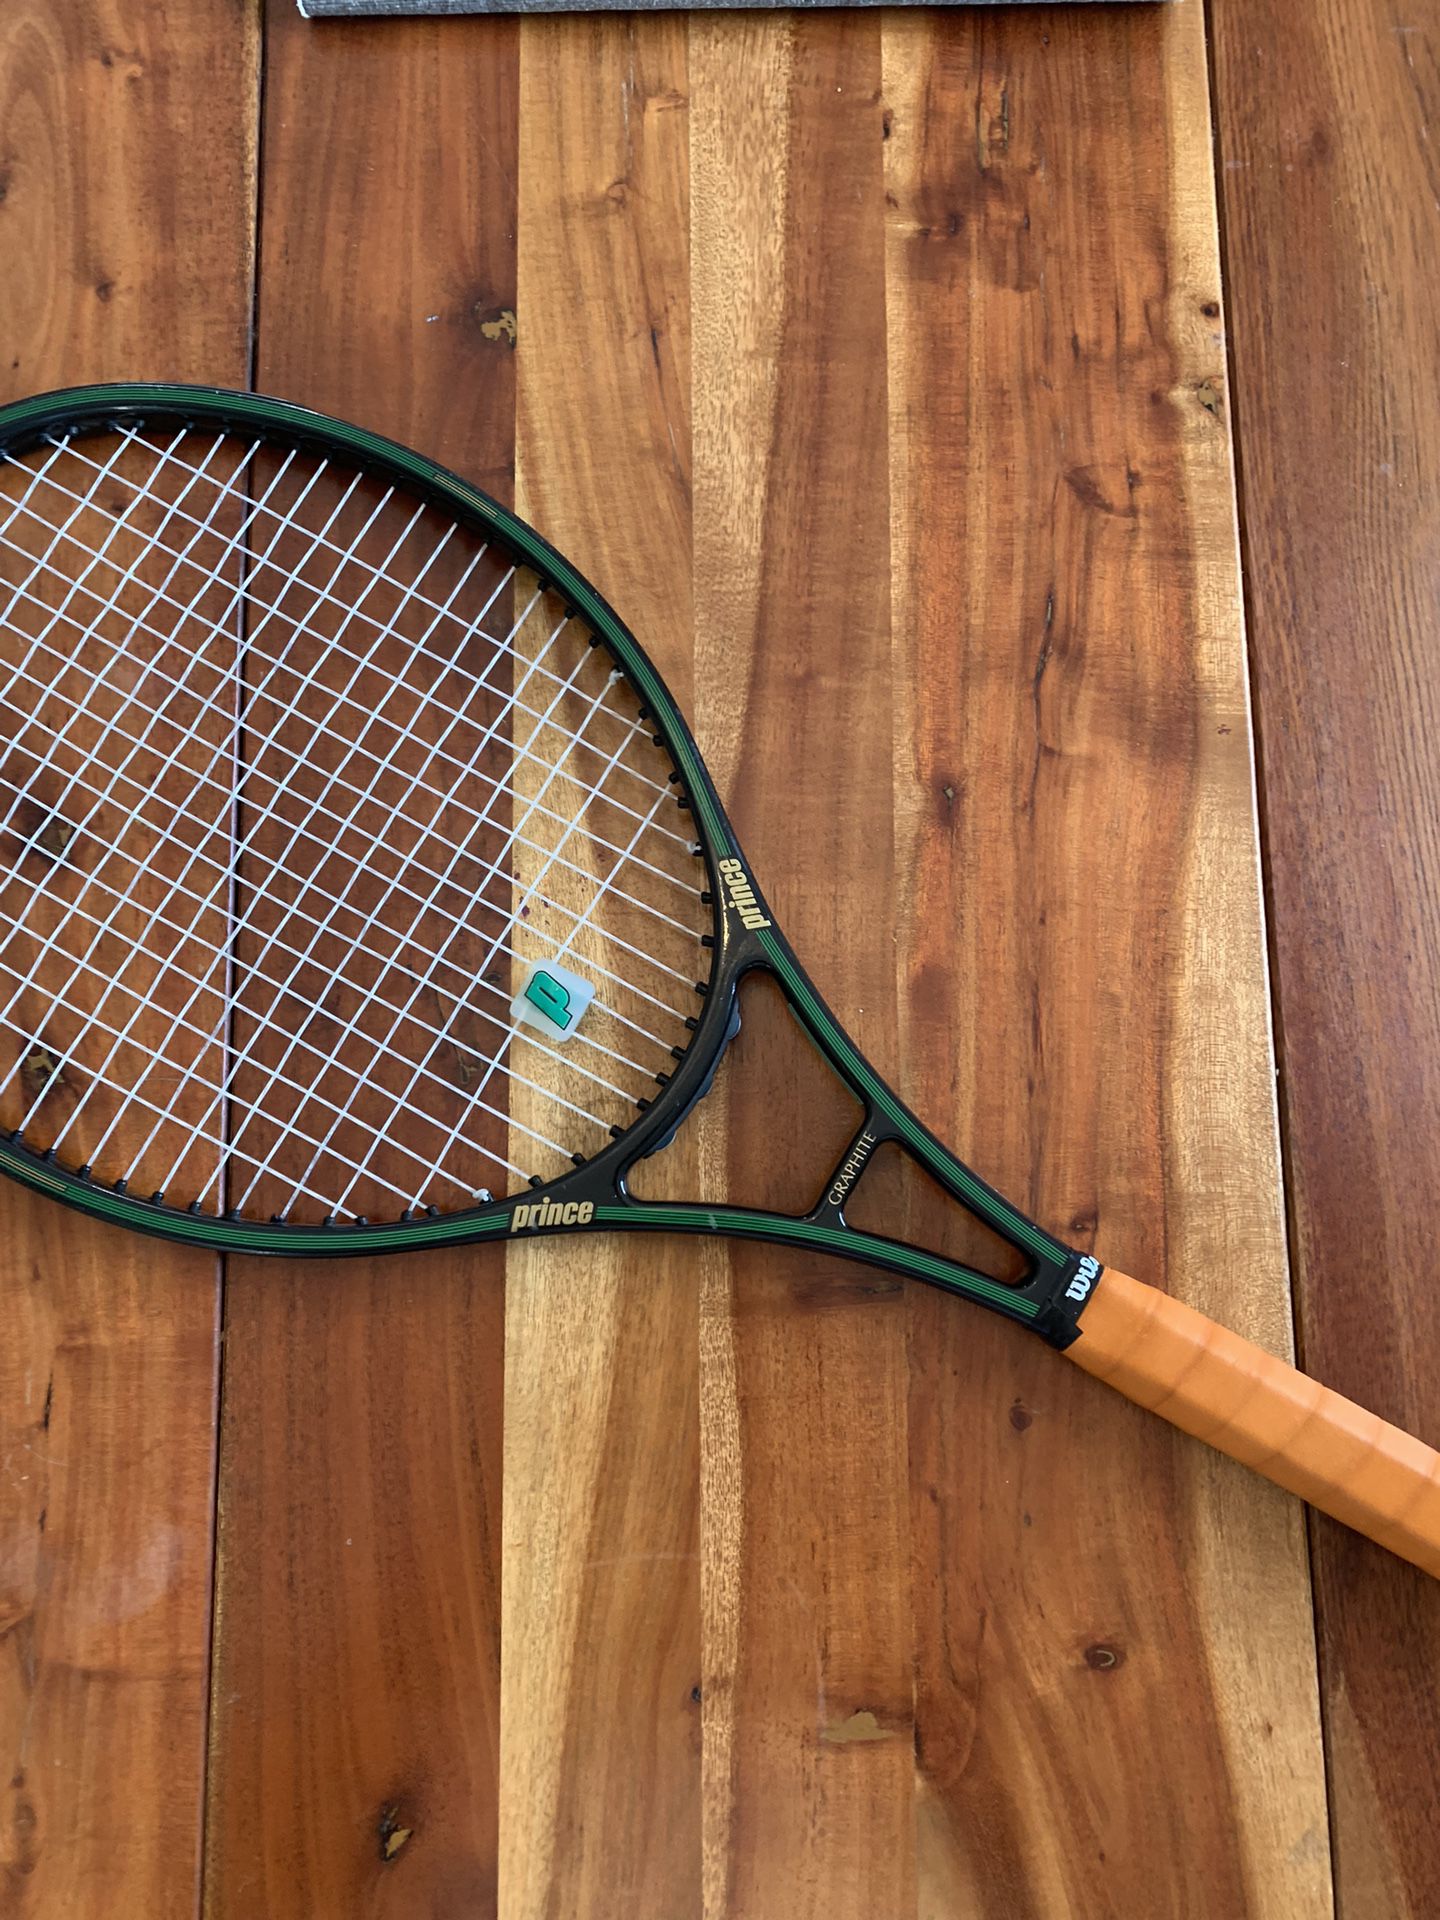 Prince Original Graphite 110 tennis racket